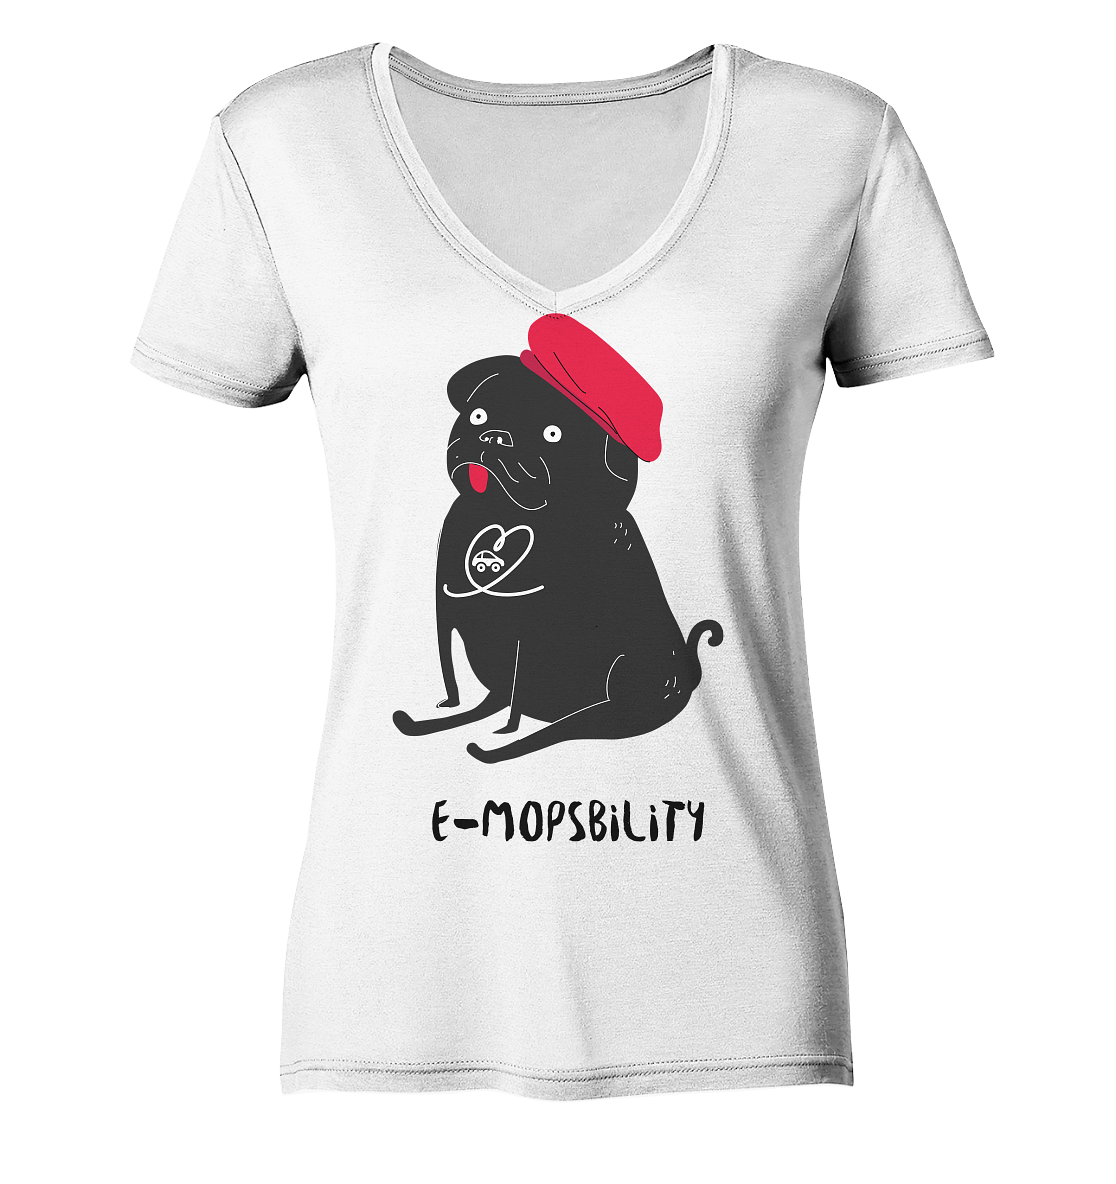 E-Mopsbility ORGANIC - Ladies Organic V-Neck Shirt